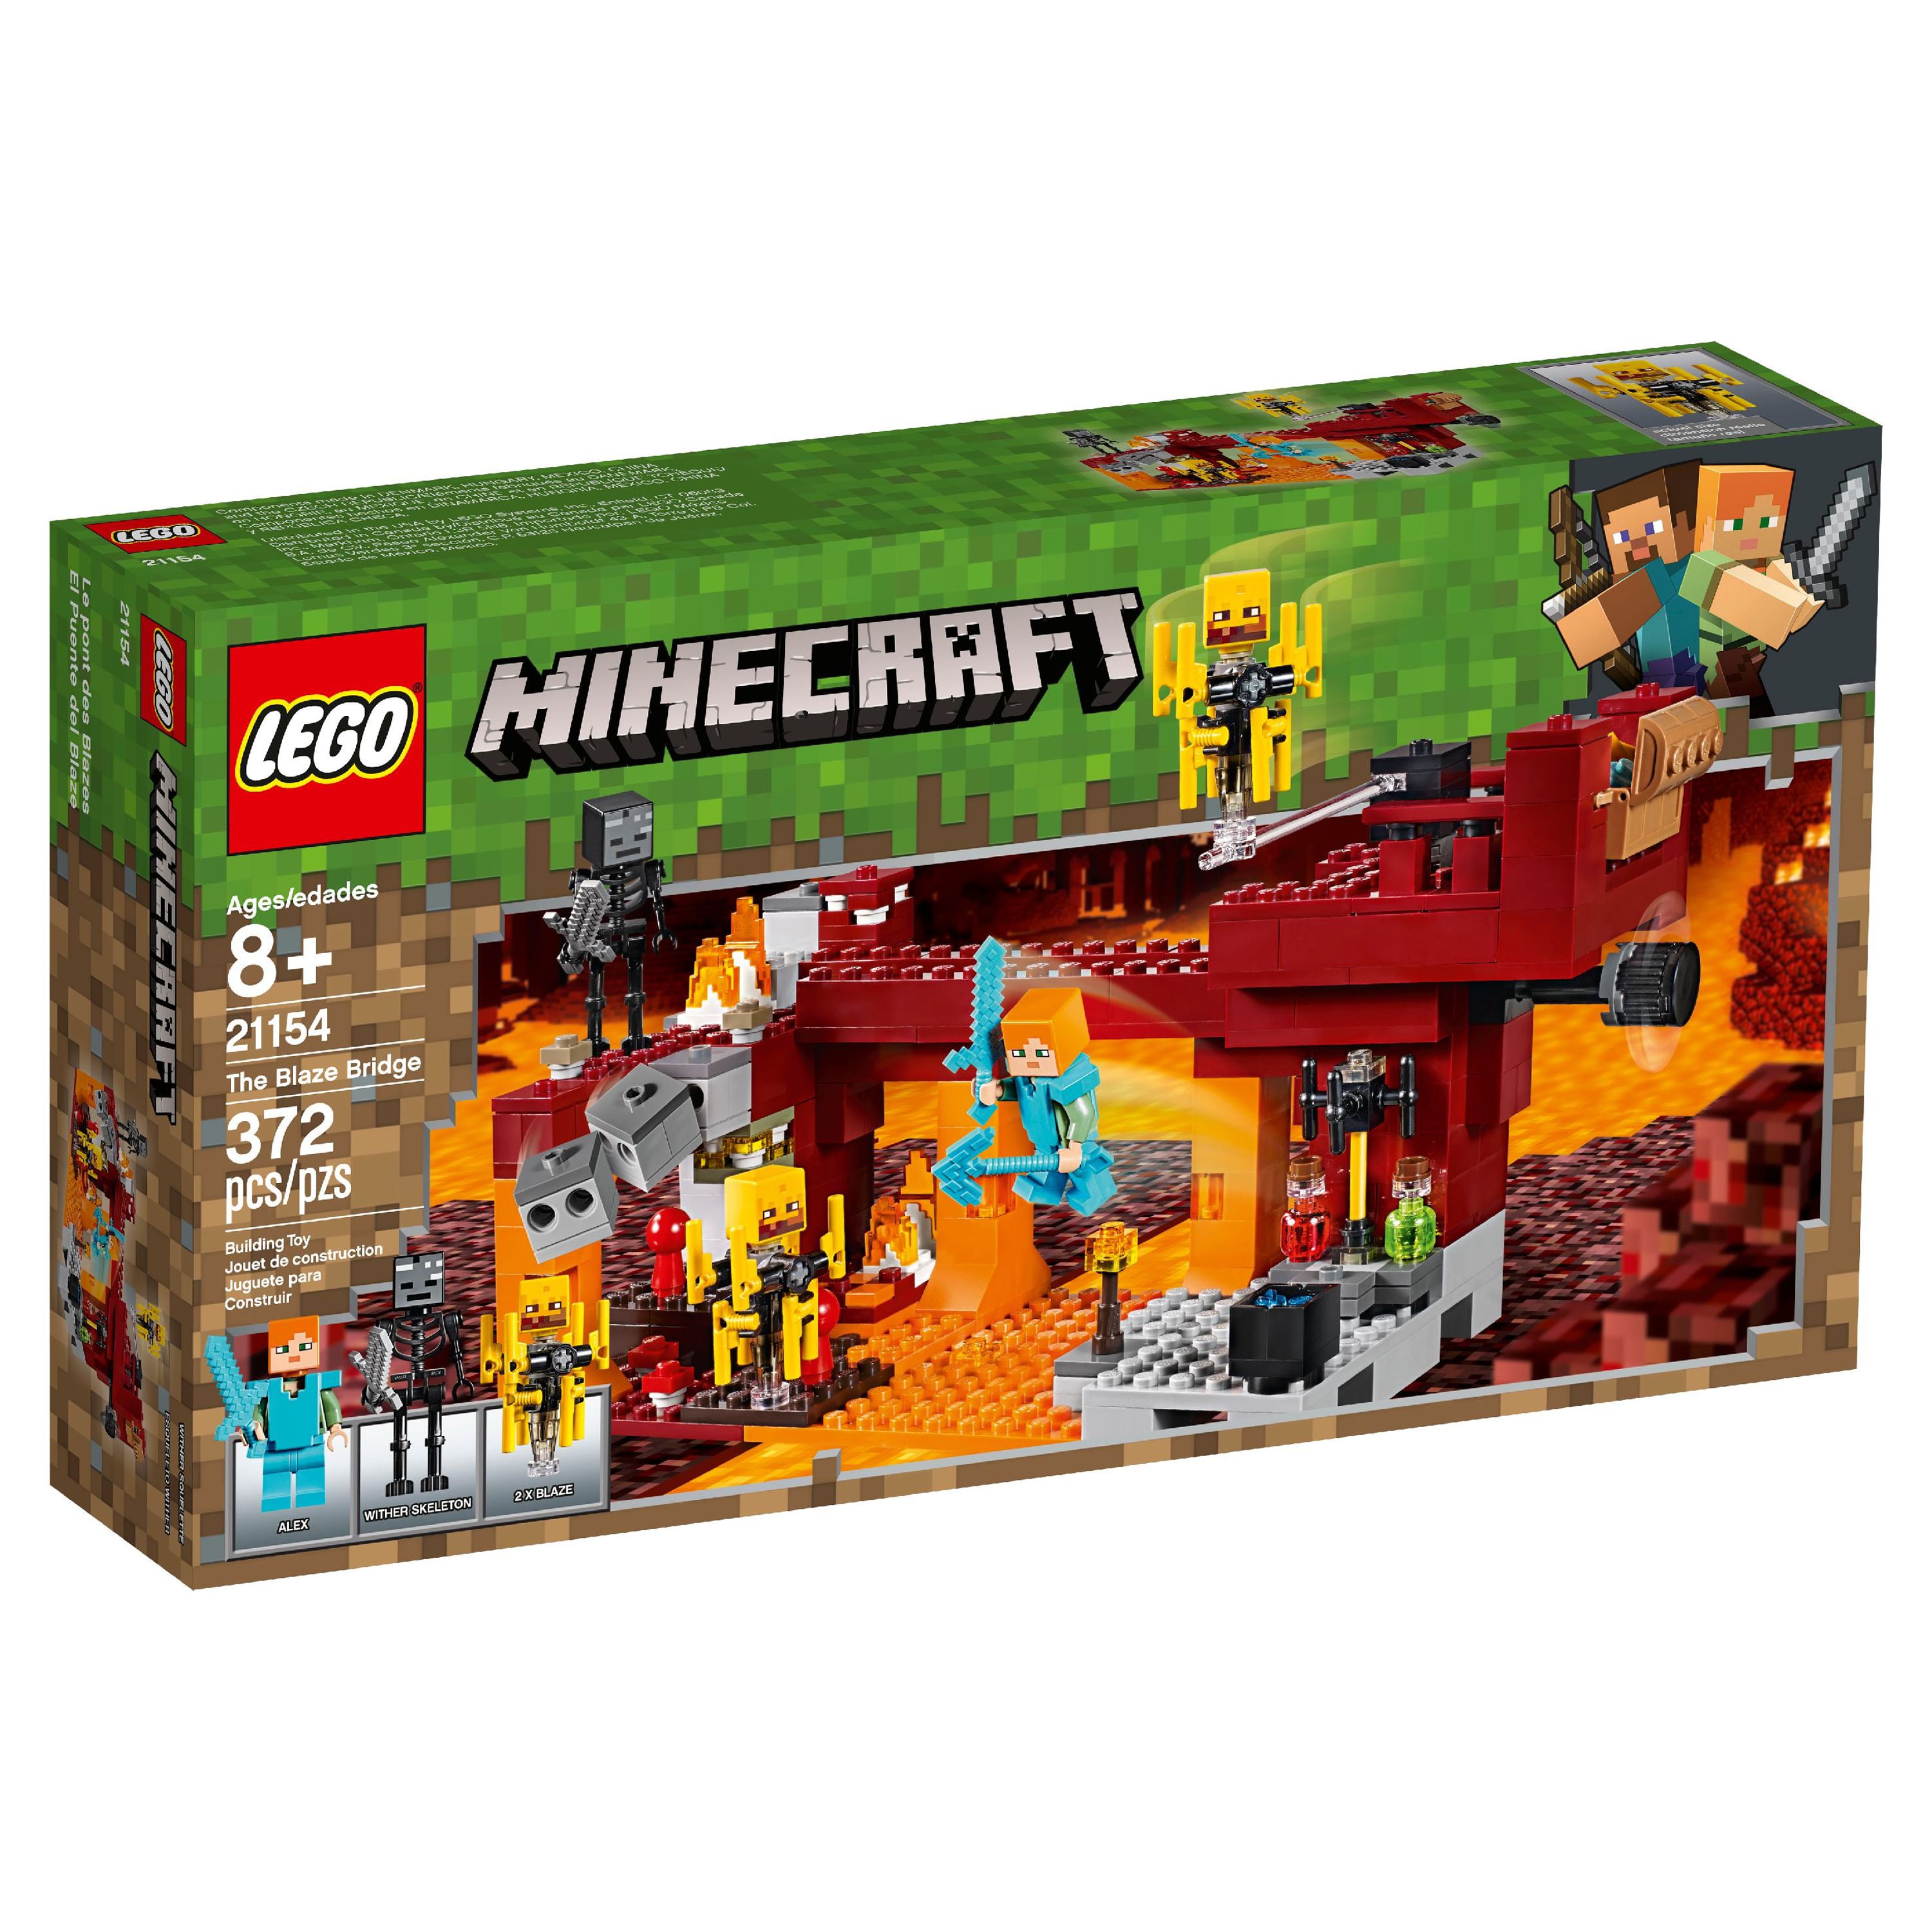 LEGO The Blaze Bridge 21154 Building Set (372 Pieces) - image 5 of 8